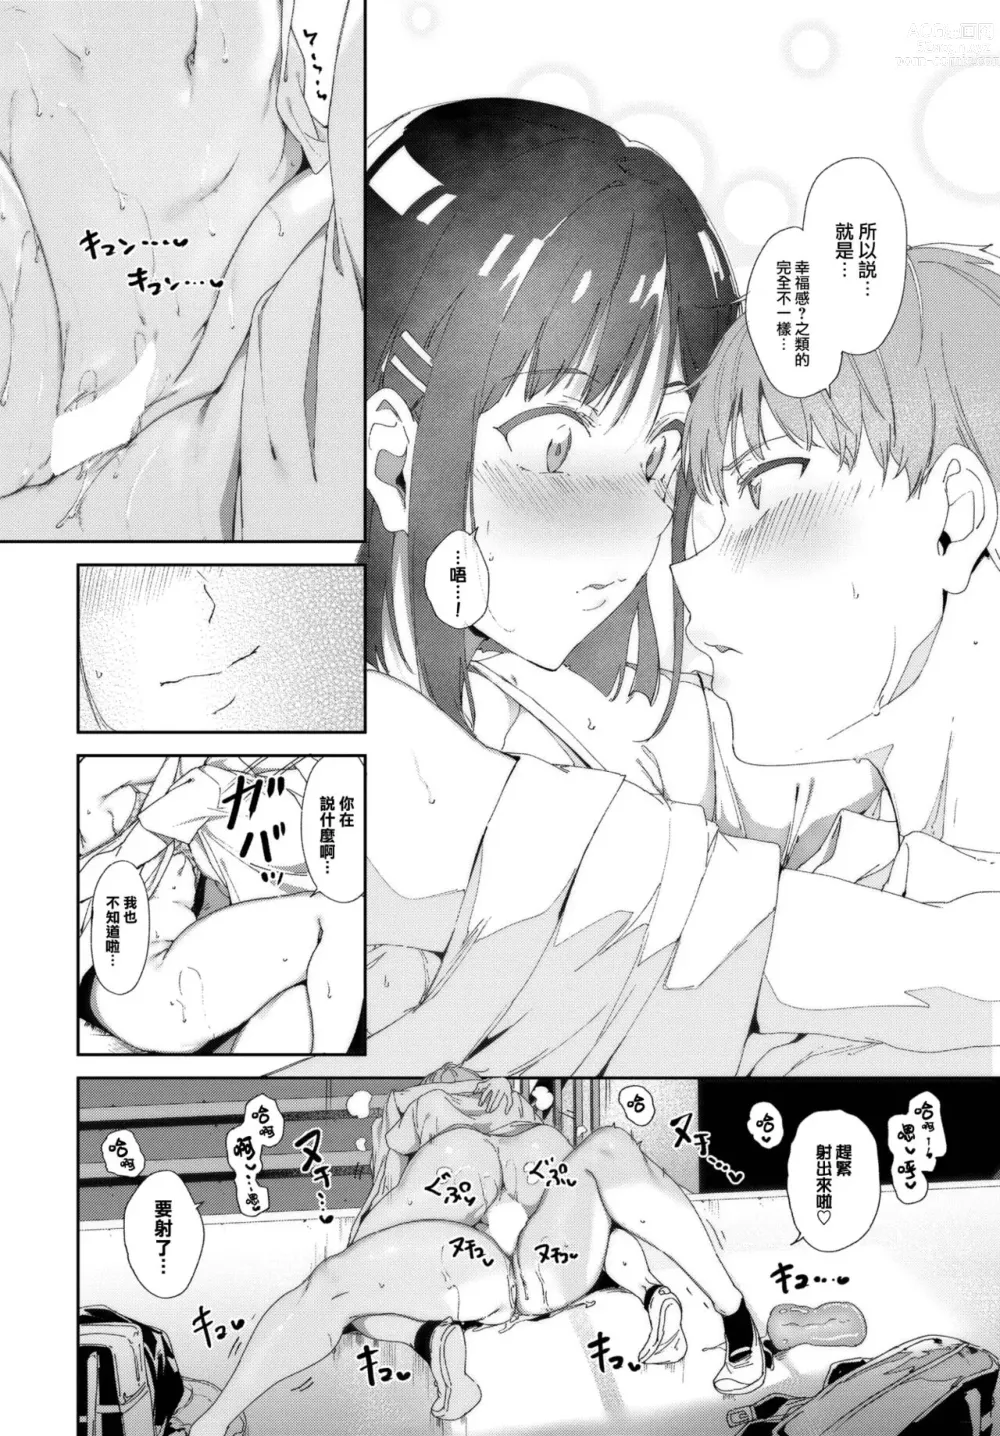 Page 11 of manga Routine2